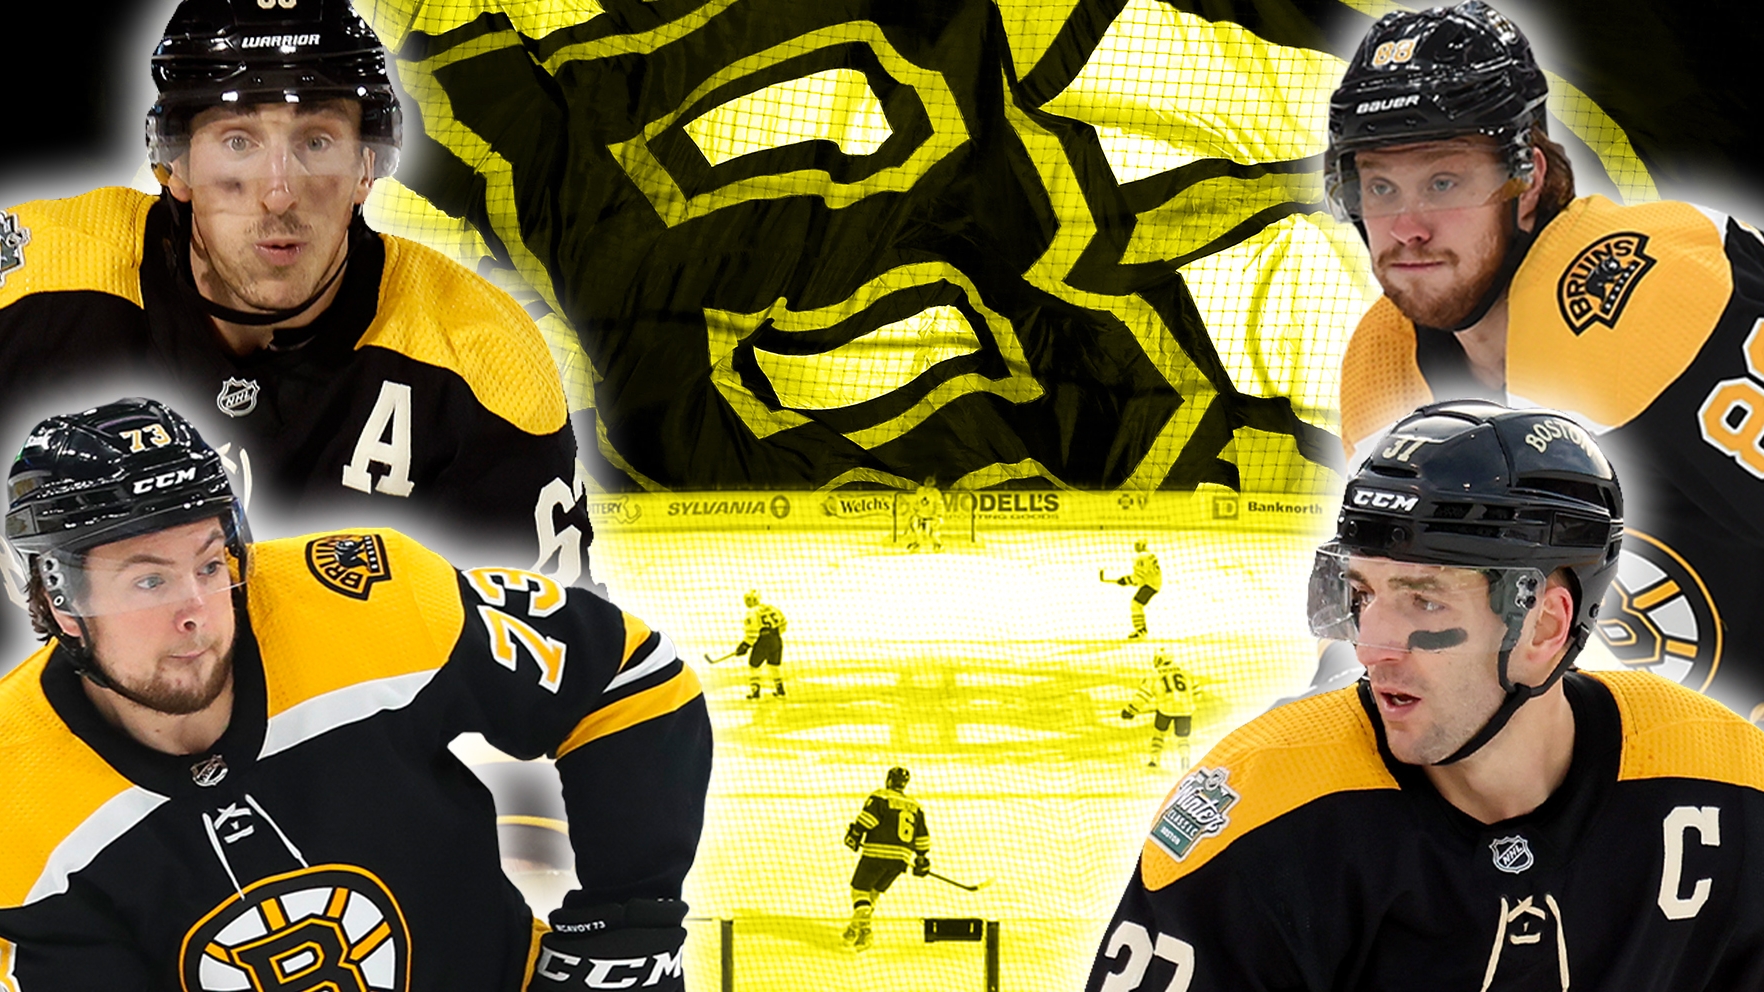 Meet the record-seeking Boston Bruins - Stream the Video